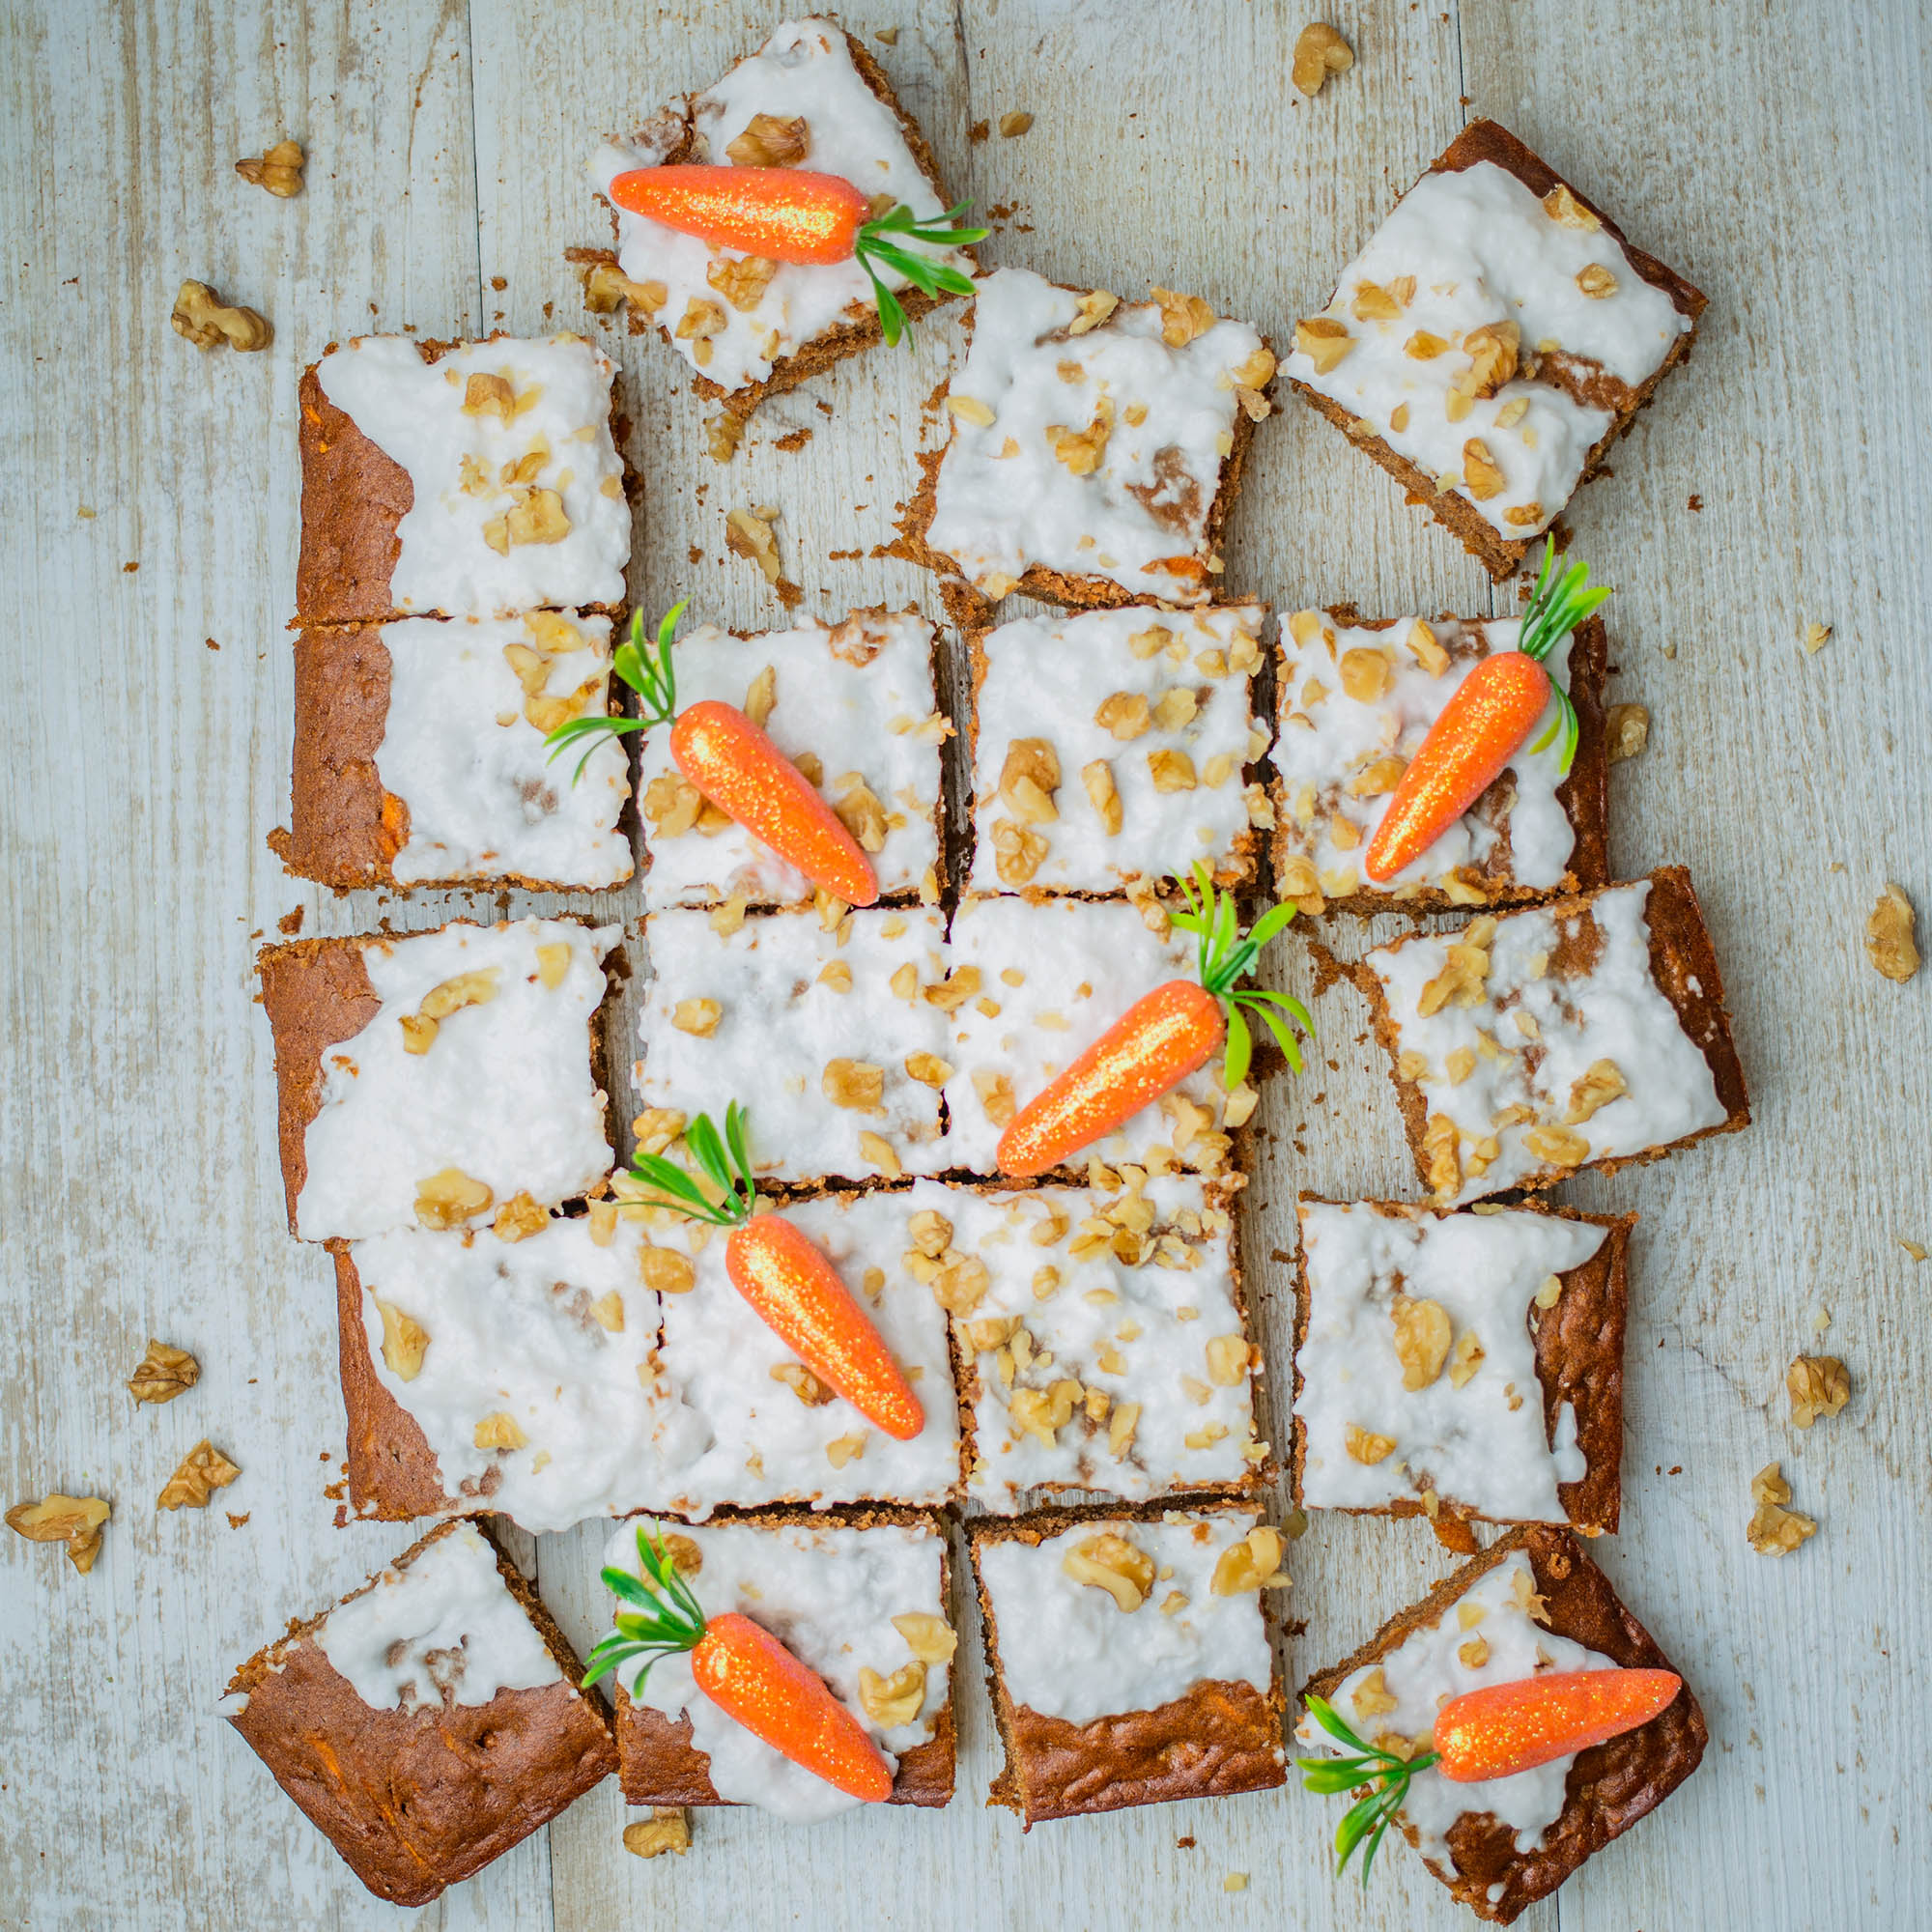 Vegan Carrot Cake Slice with Coconut Yogurt Frosting